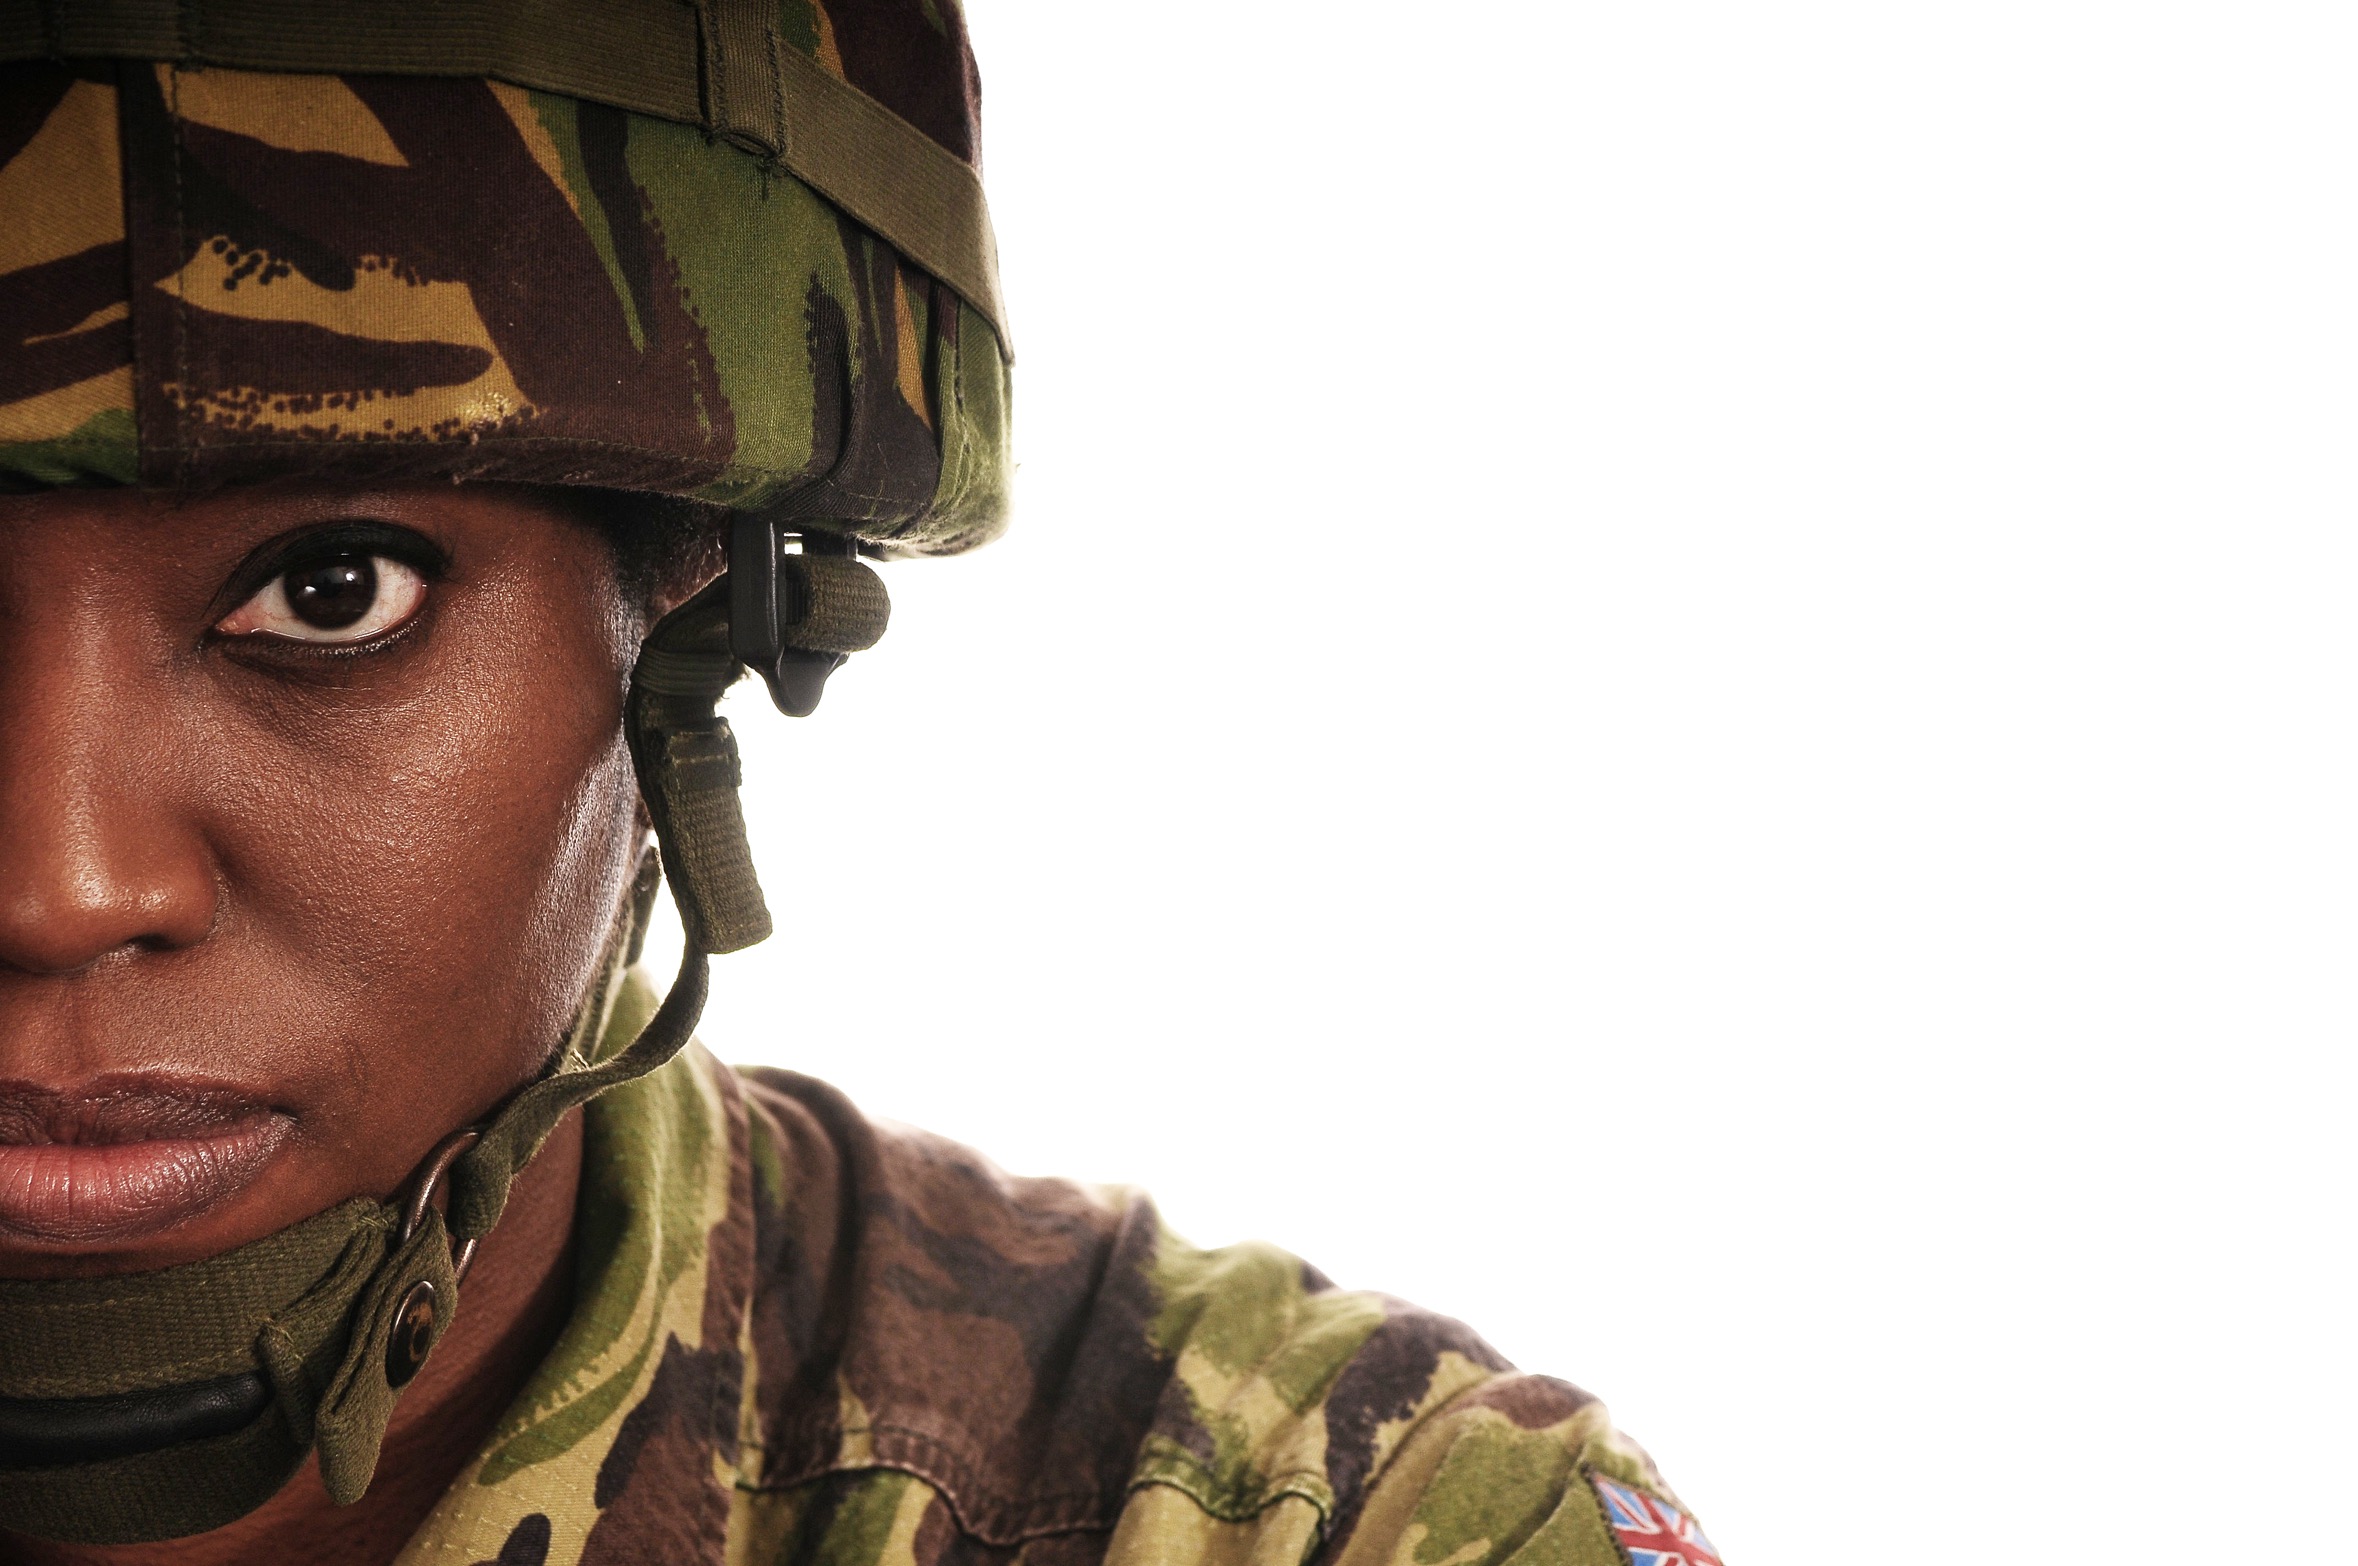 Female Soldier shown half face.Photo by John Gomez on Shutterstock